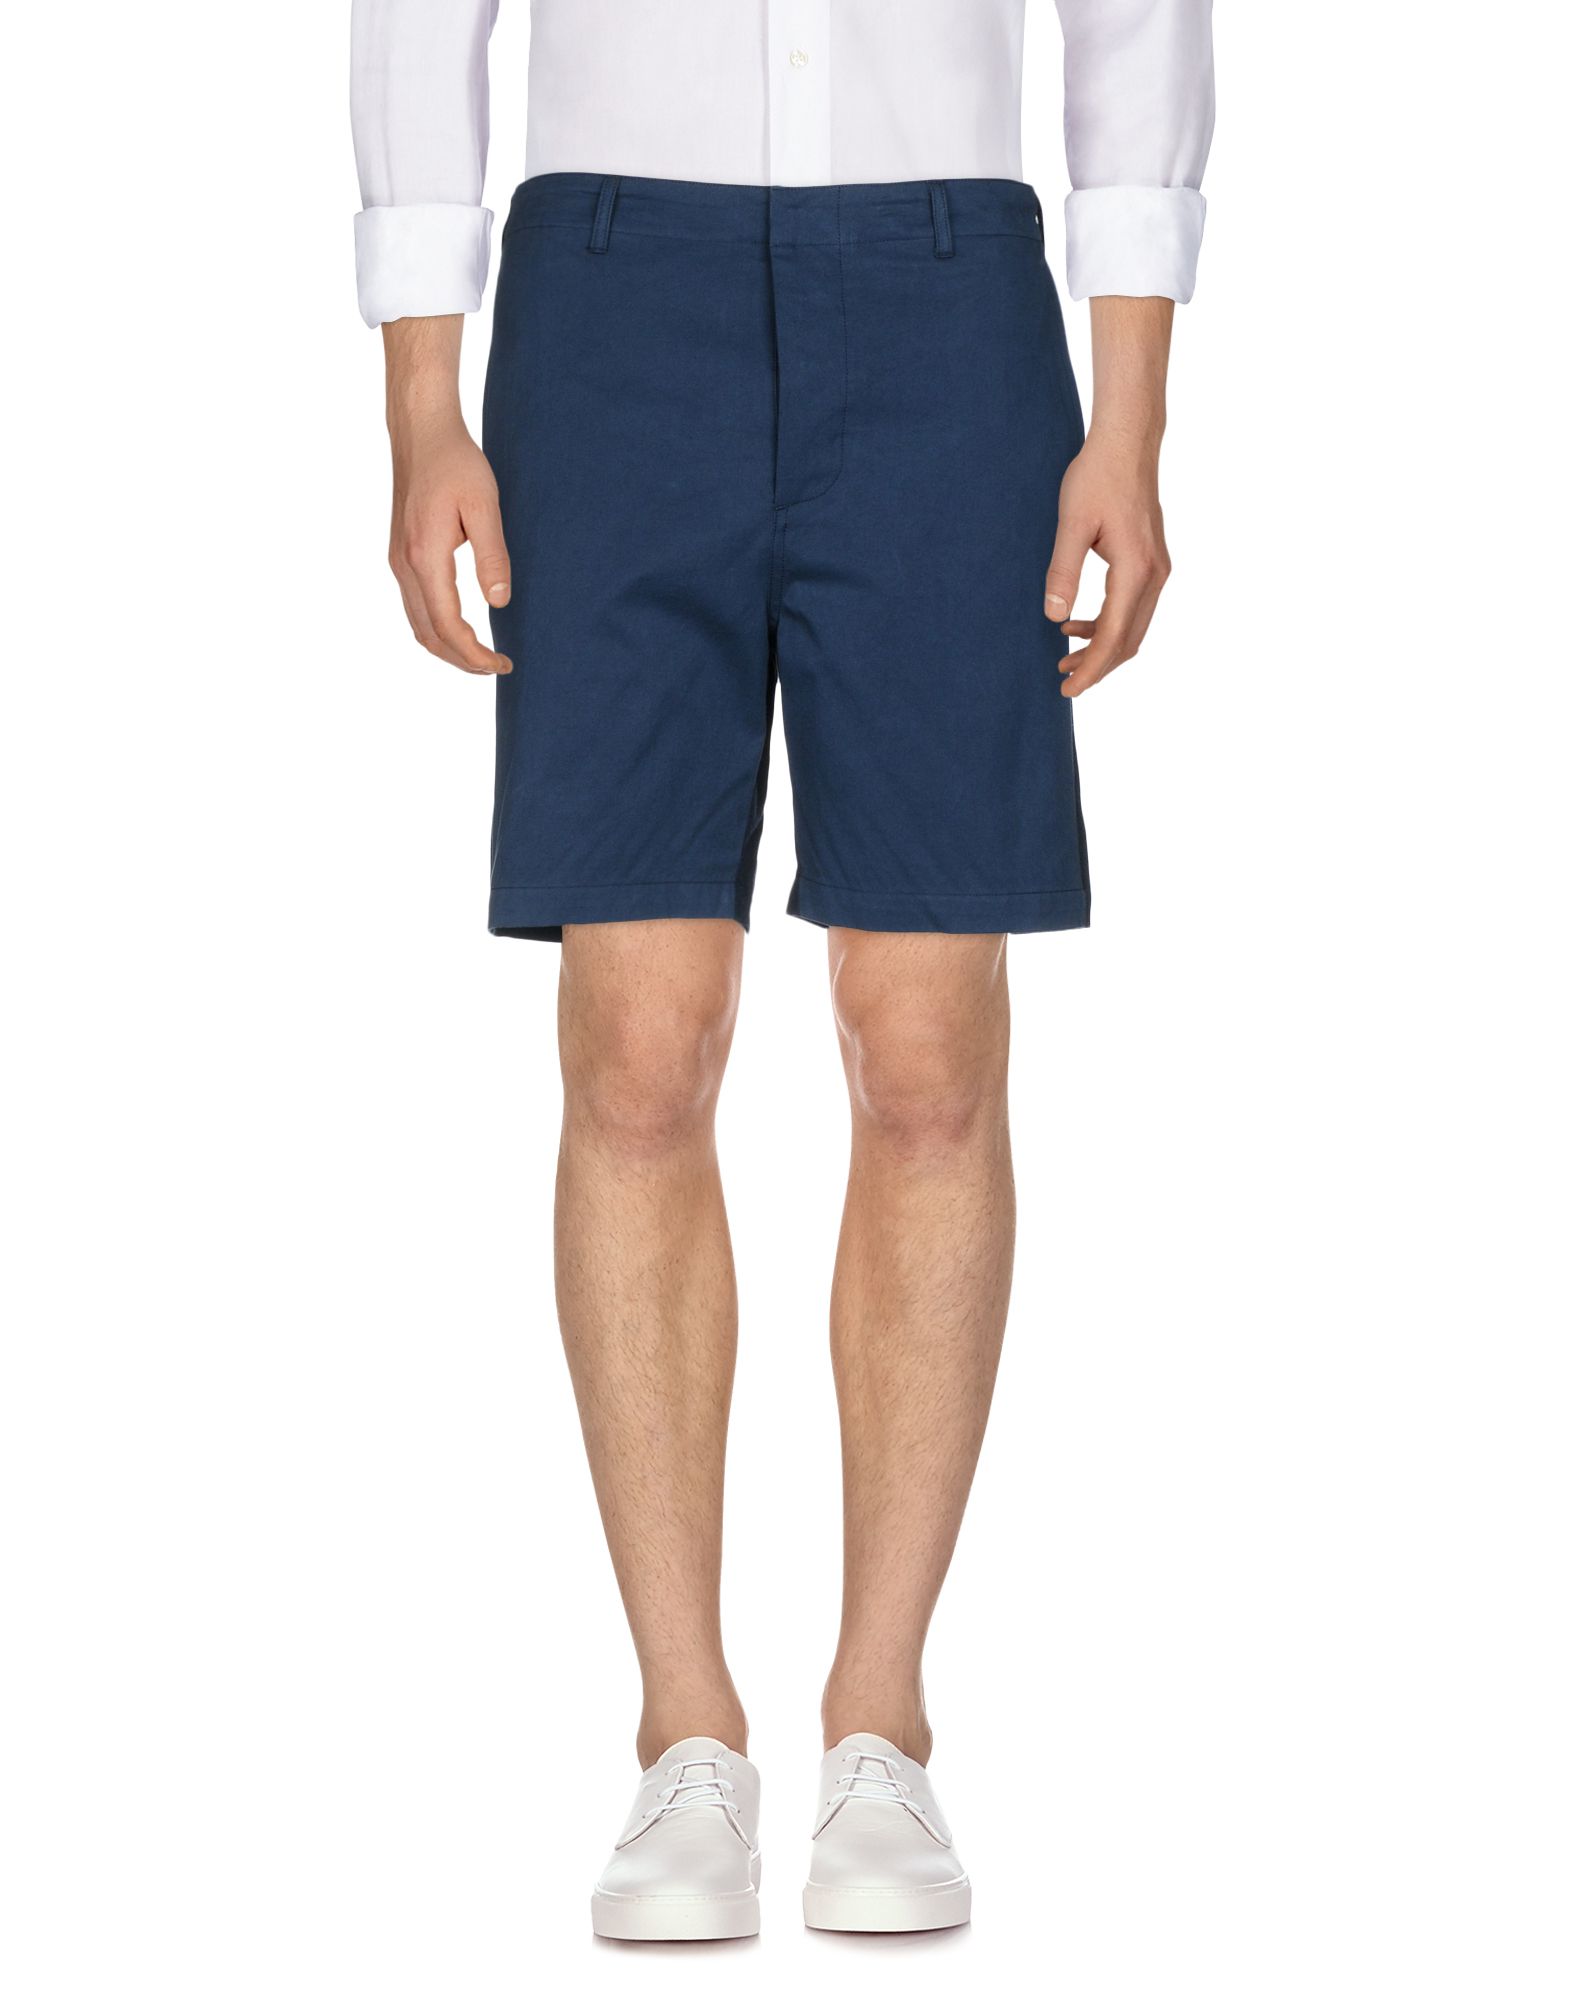 FANMAIL Shorts & Bermuda,13176685BF 7